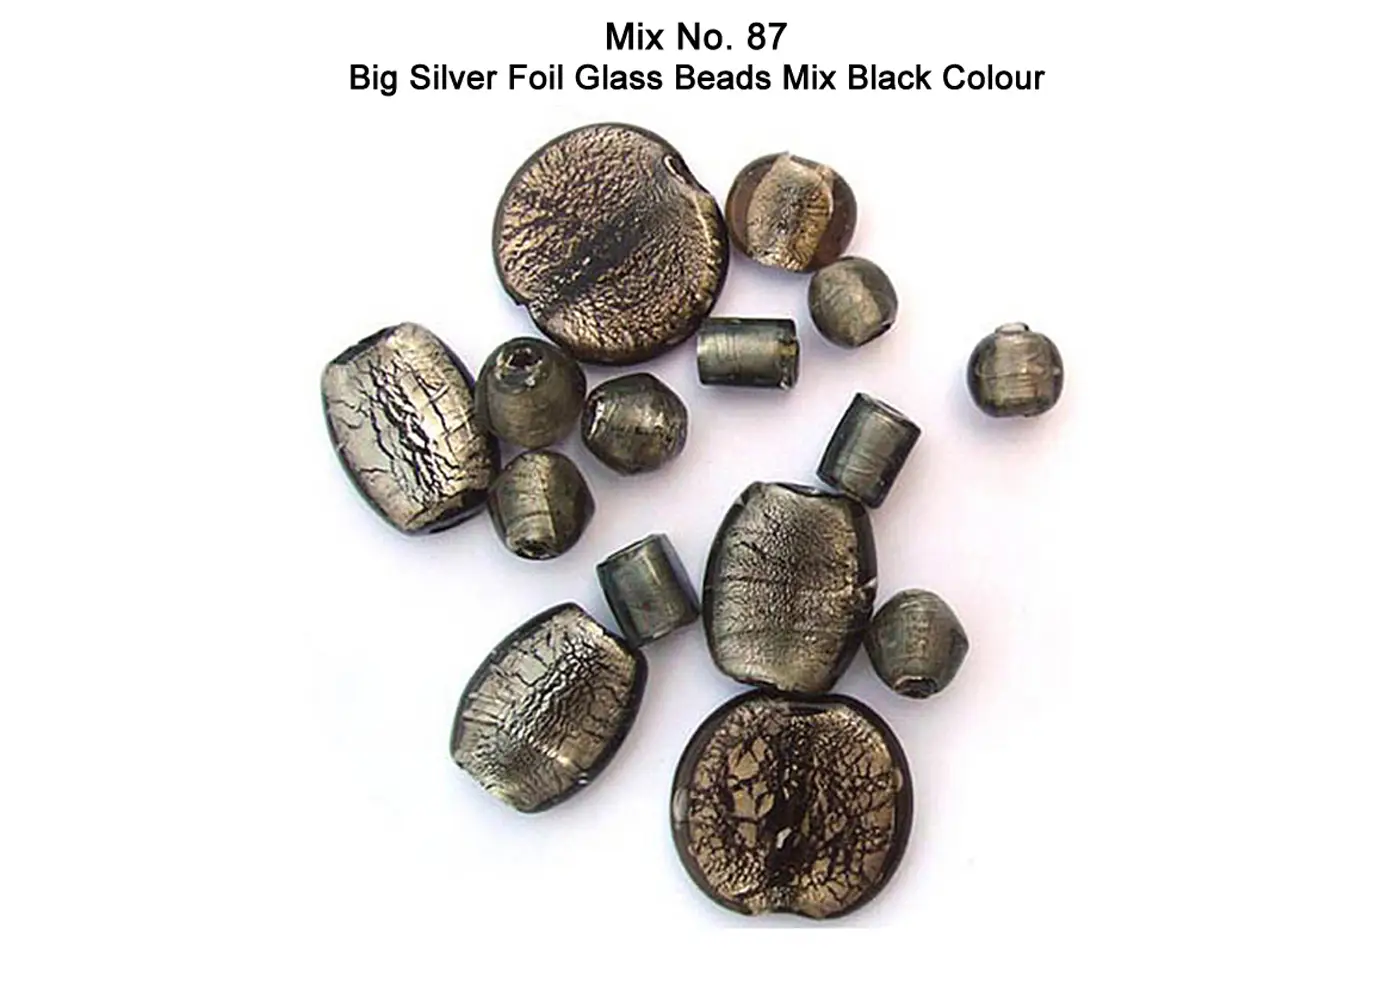 Big silver foil beads in Black color